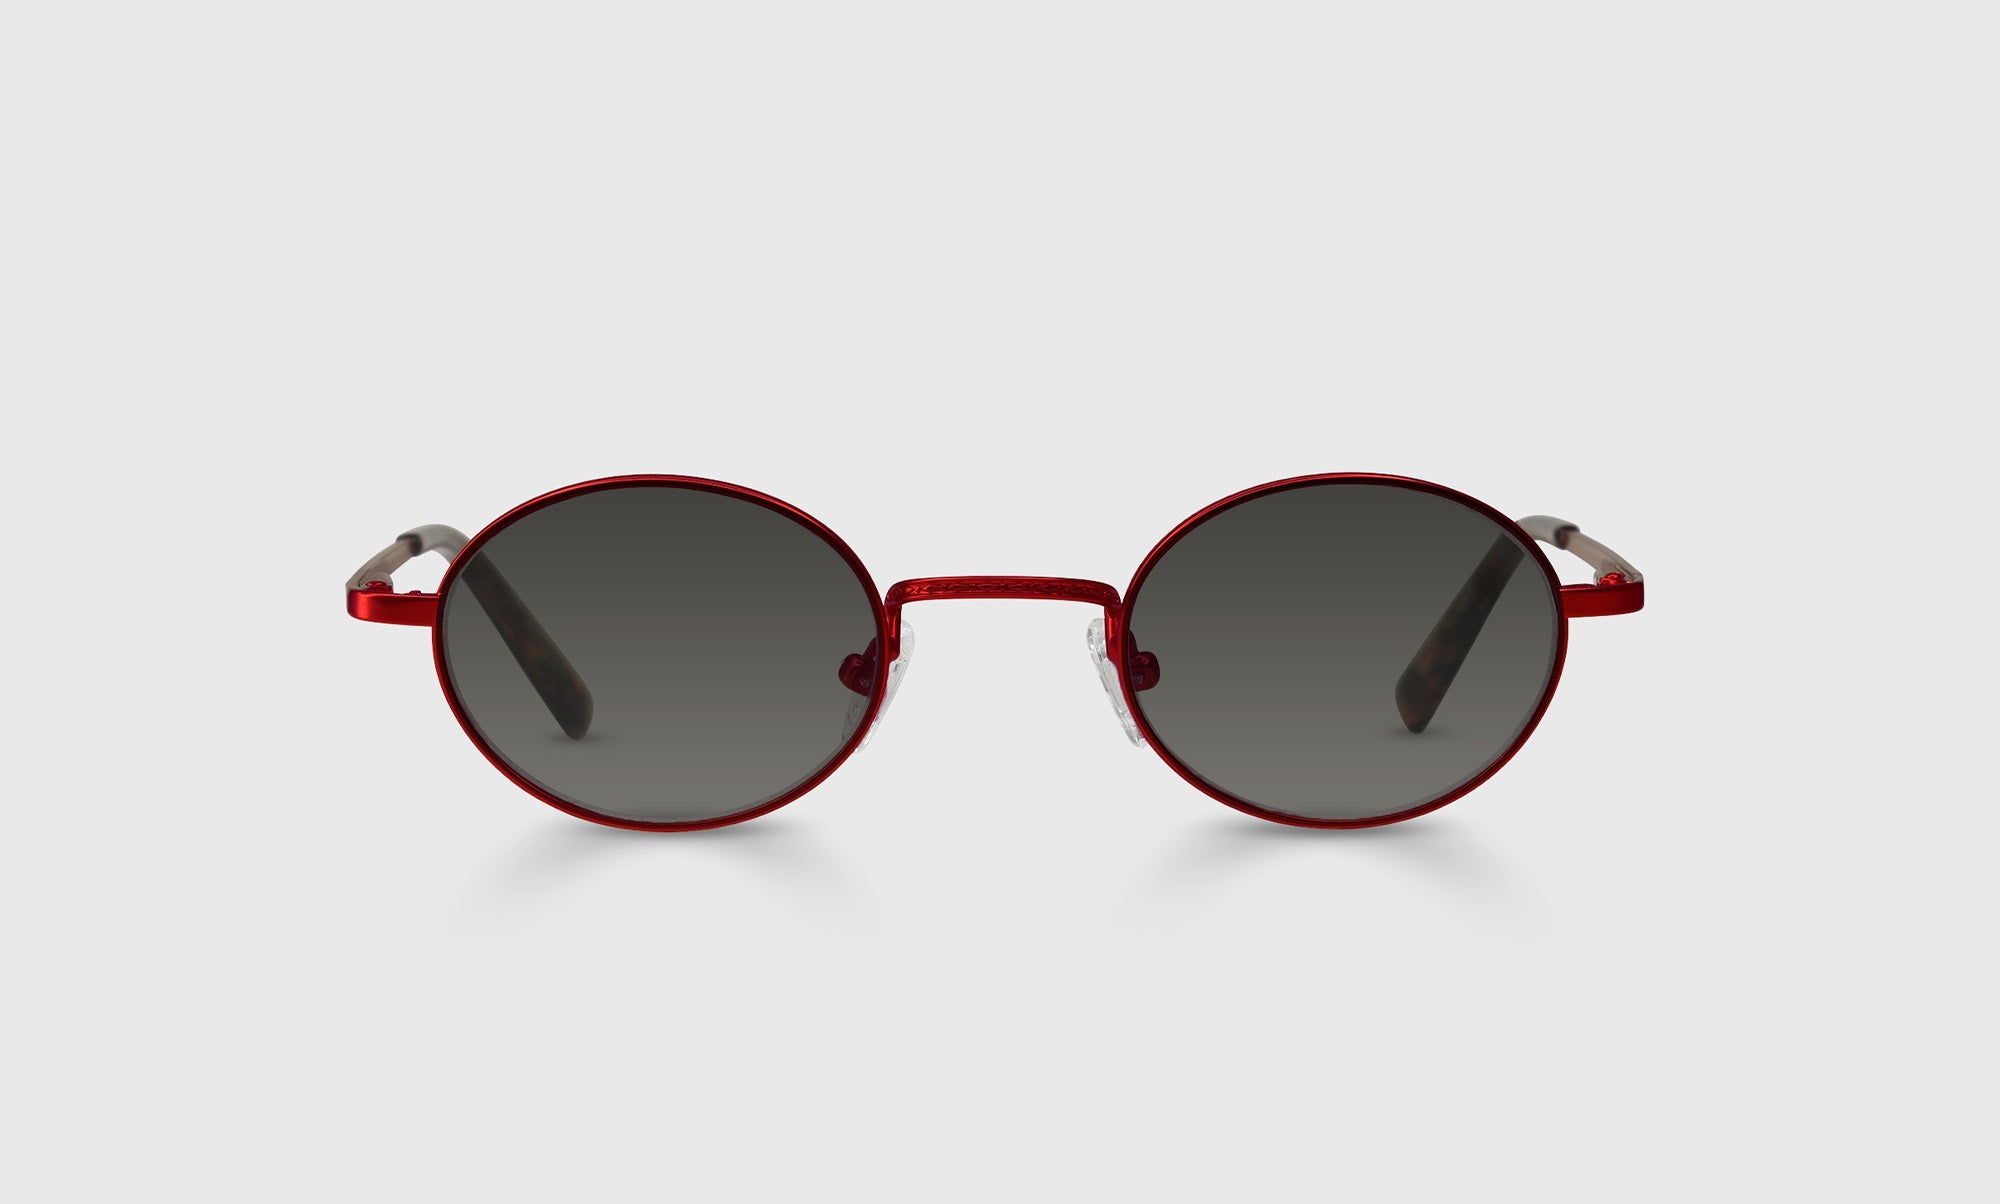 03-pg | classic Eyebobs Teddy, Round, Narrow, polarized grey sunglasses